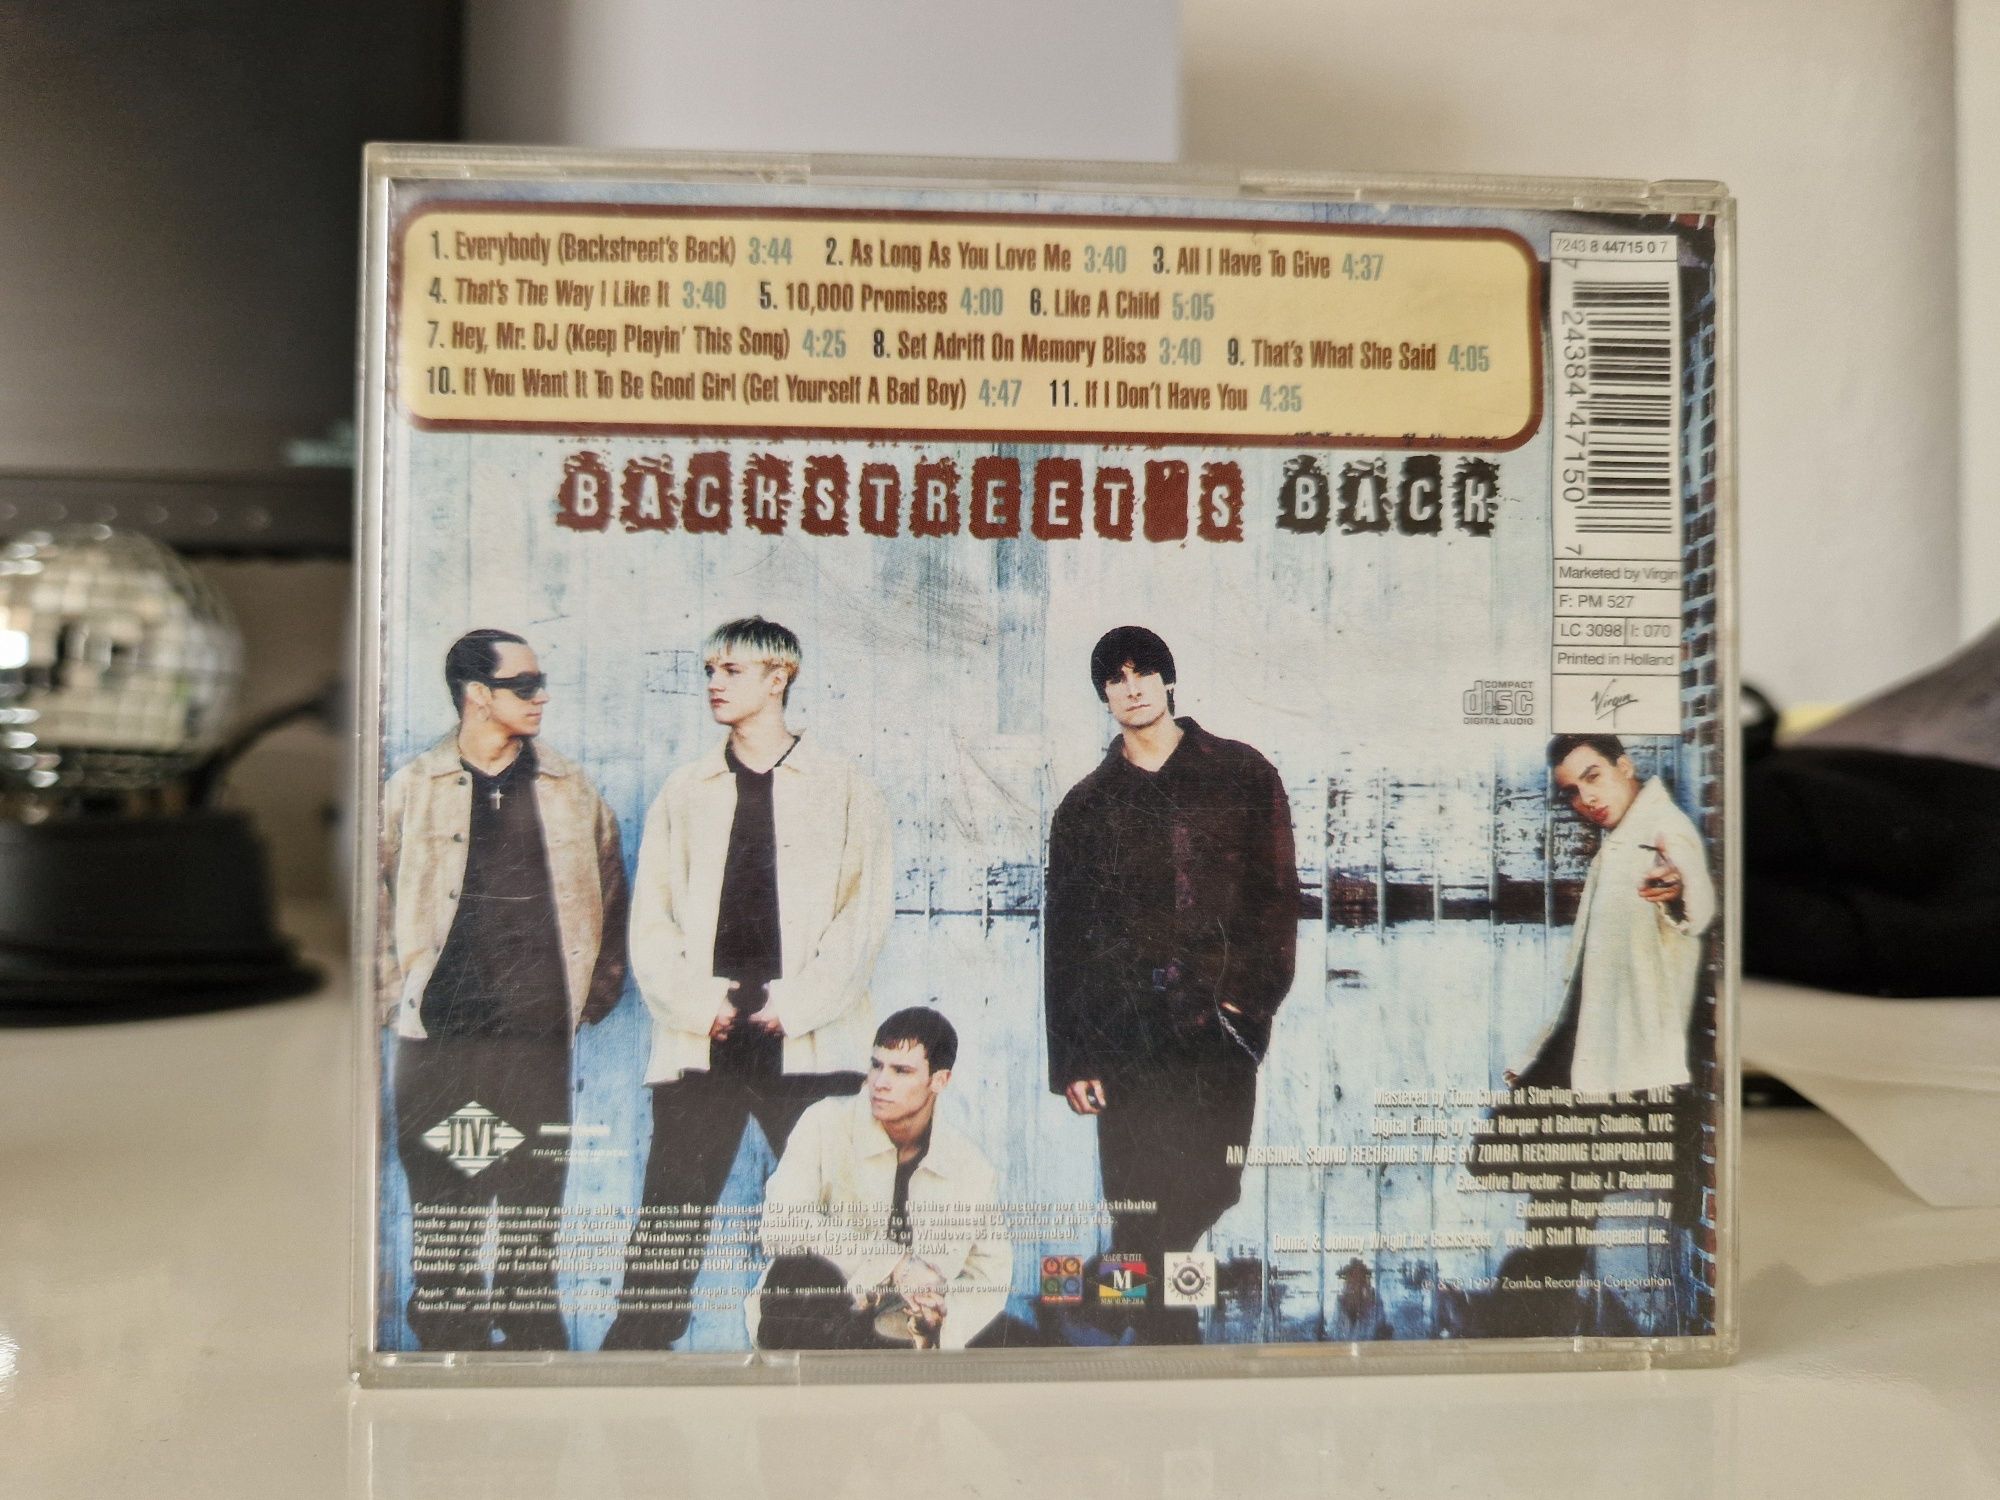 Backstreet Boys - Backstreet Back CD